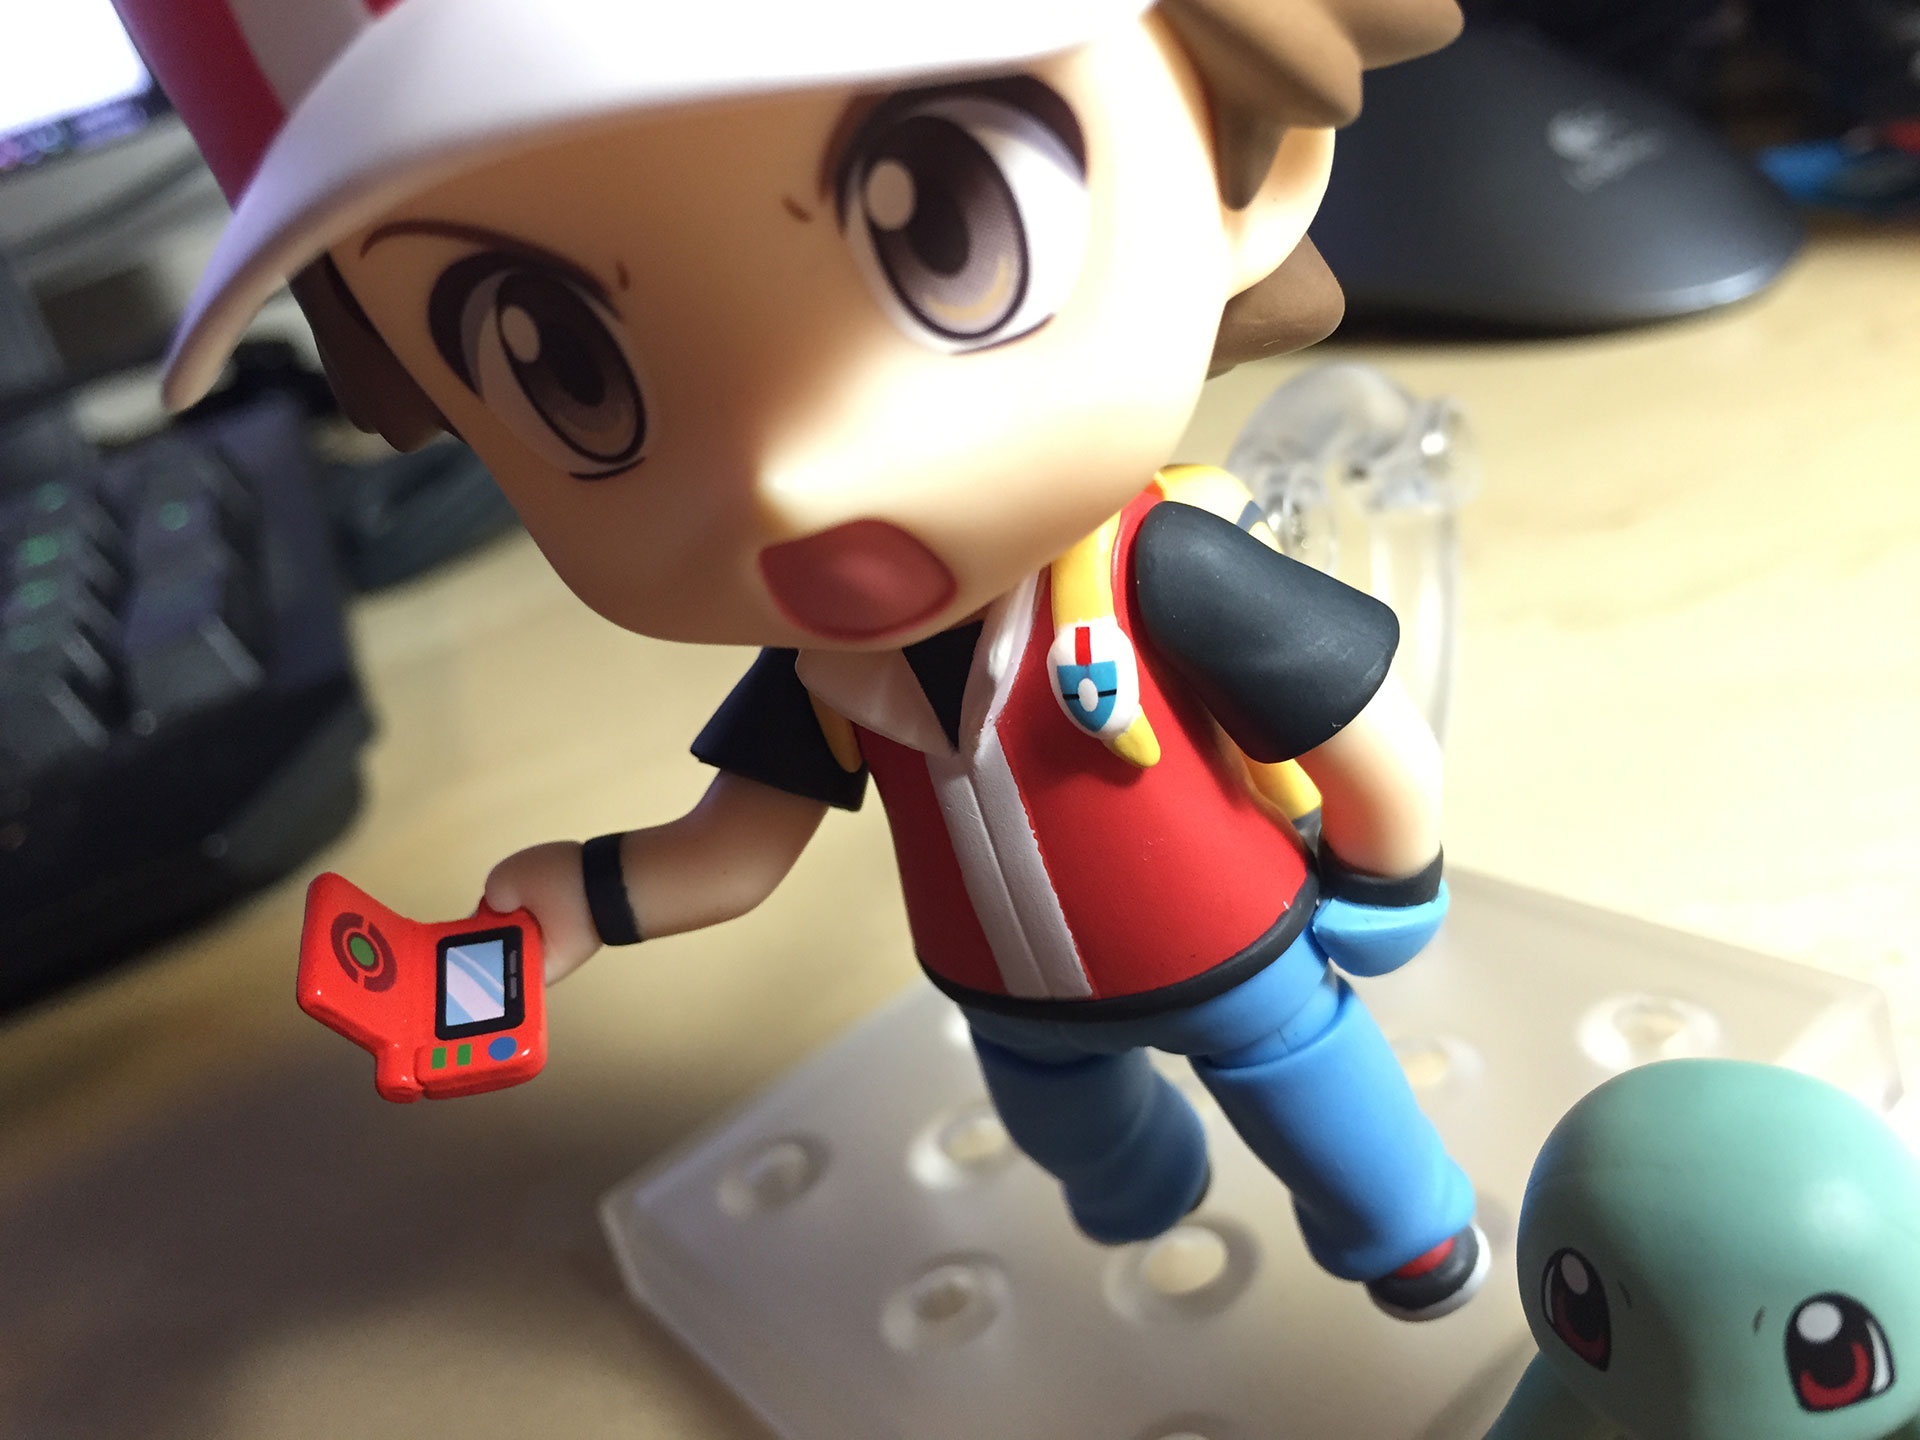 Nendoroid Pokémon Trainer Red: The Kotaku Review